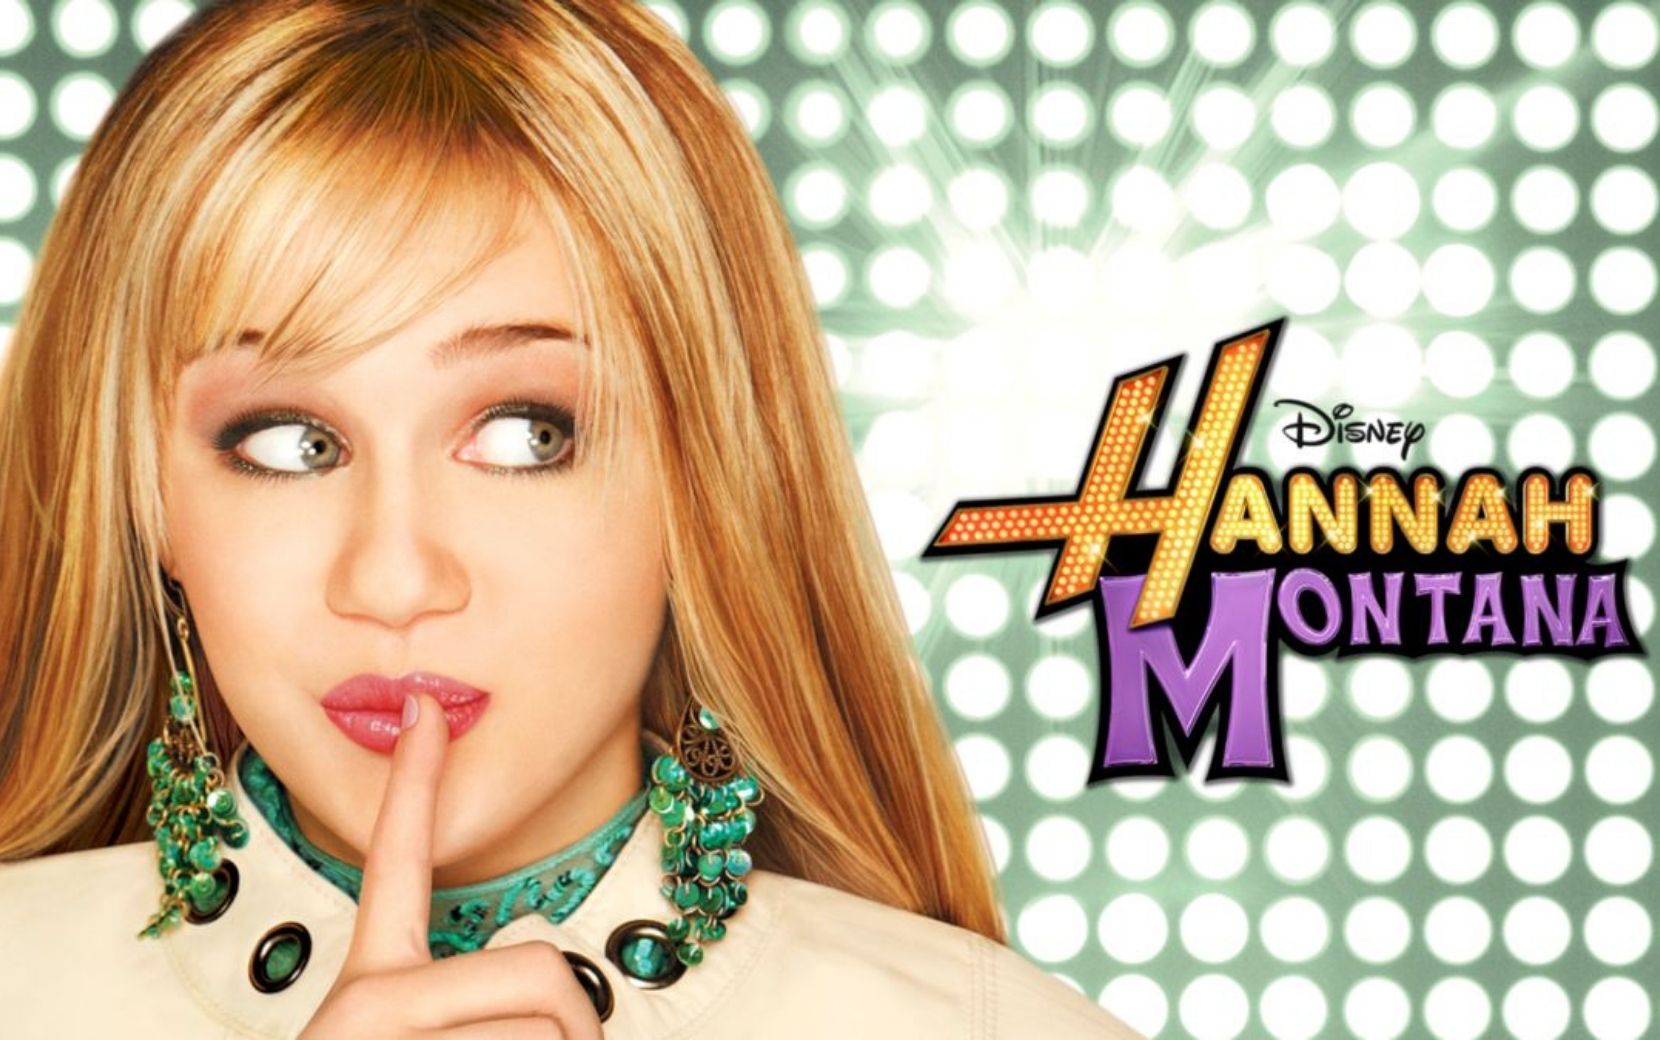 15 anos de Hannah Montana: confira 6 fatos e curiosidades sobre o seriado